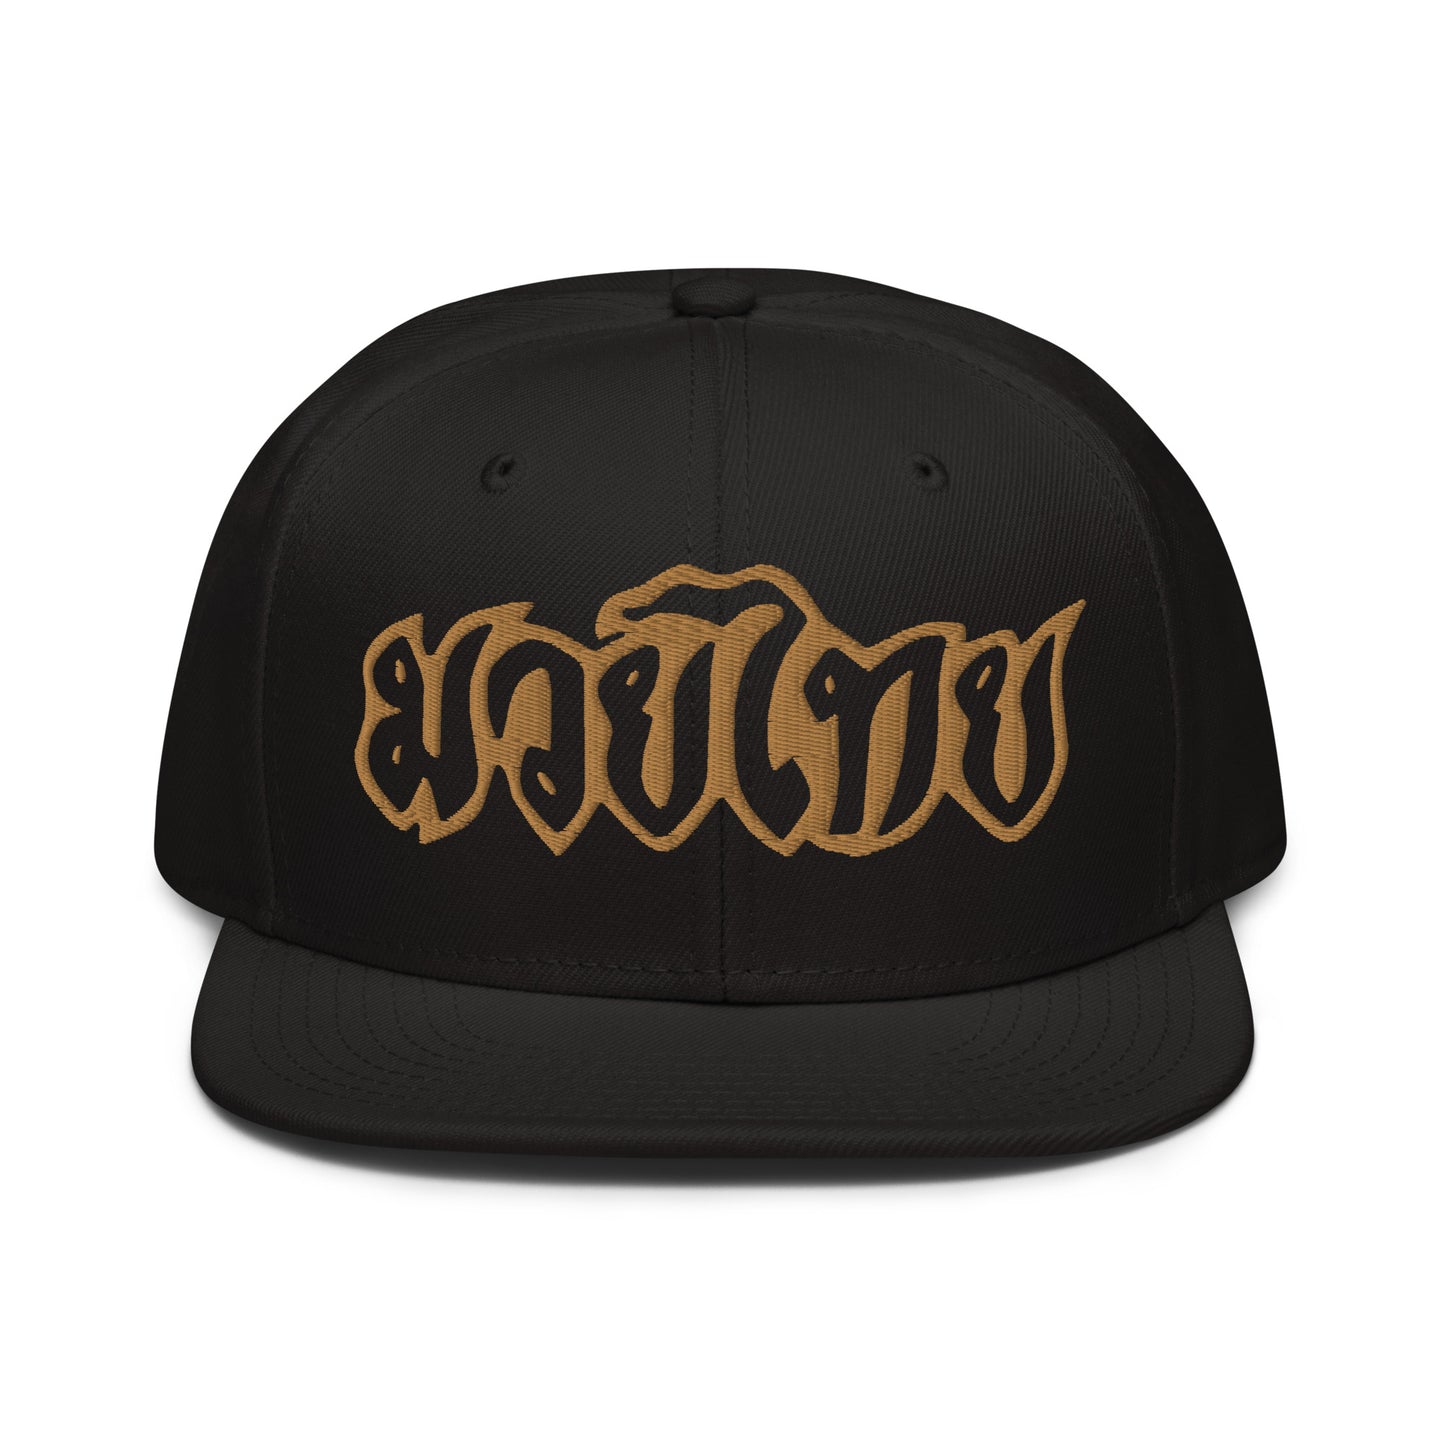 Muay Thai (GOLD) Lettering Hat